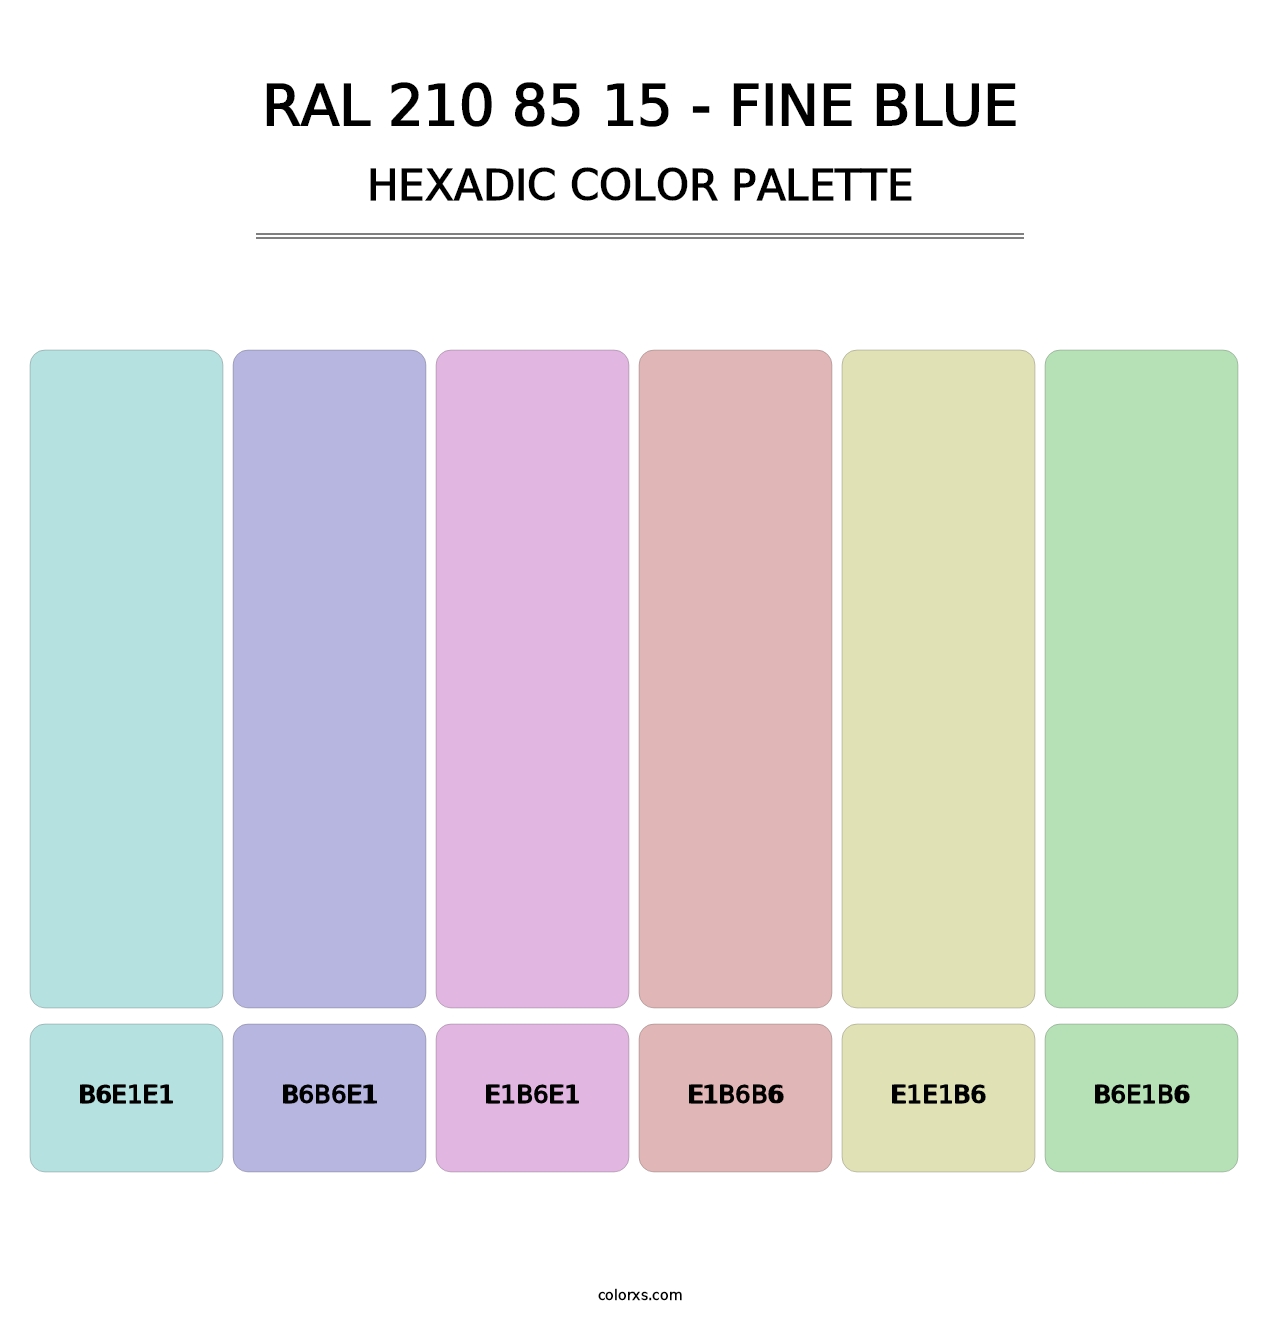 RAL 210 85 15 - Fine Blue - Hexadic Color Palette